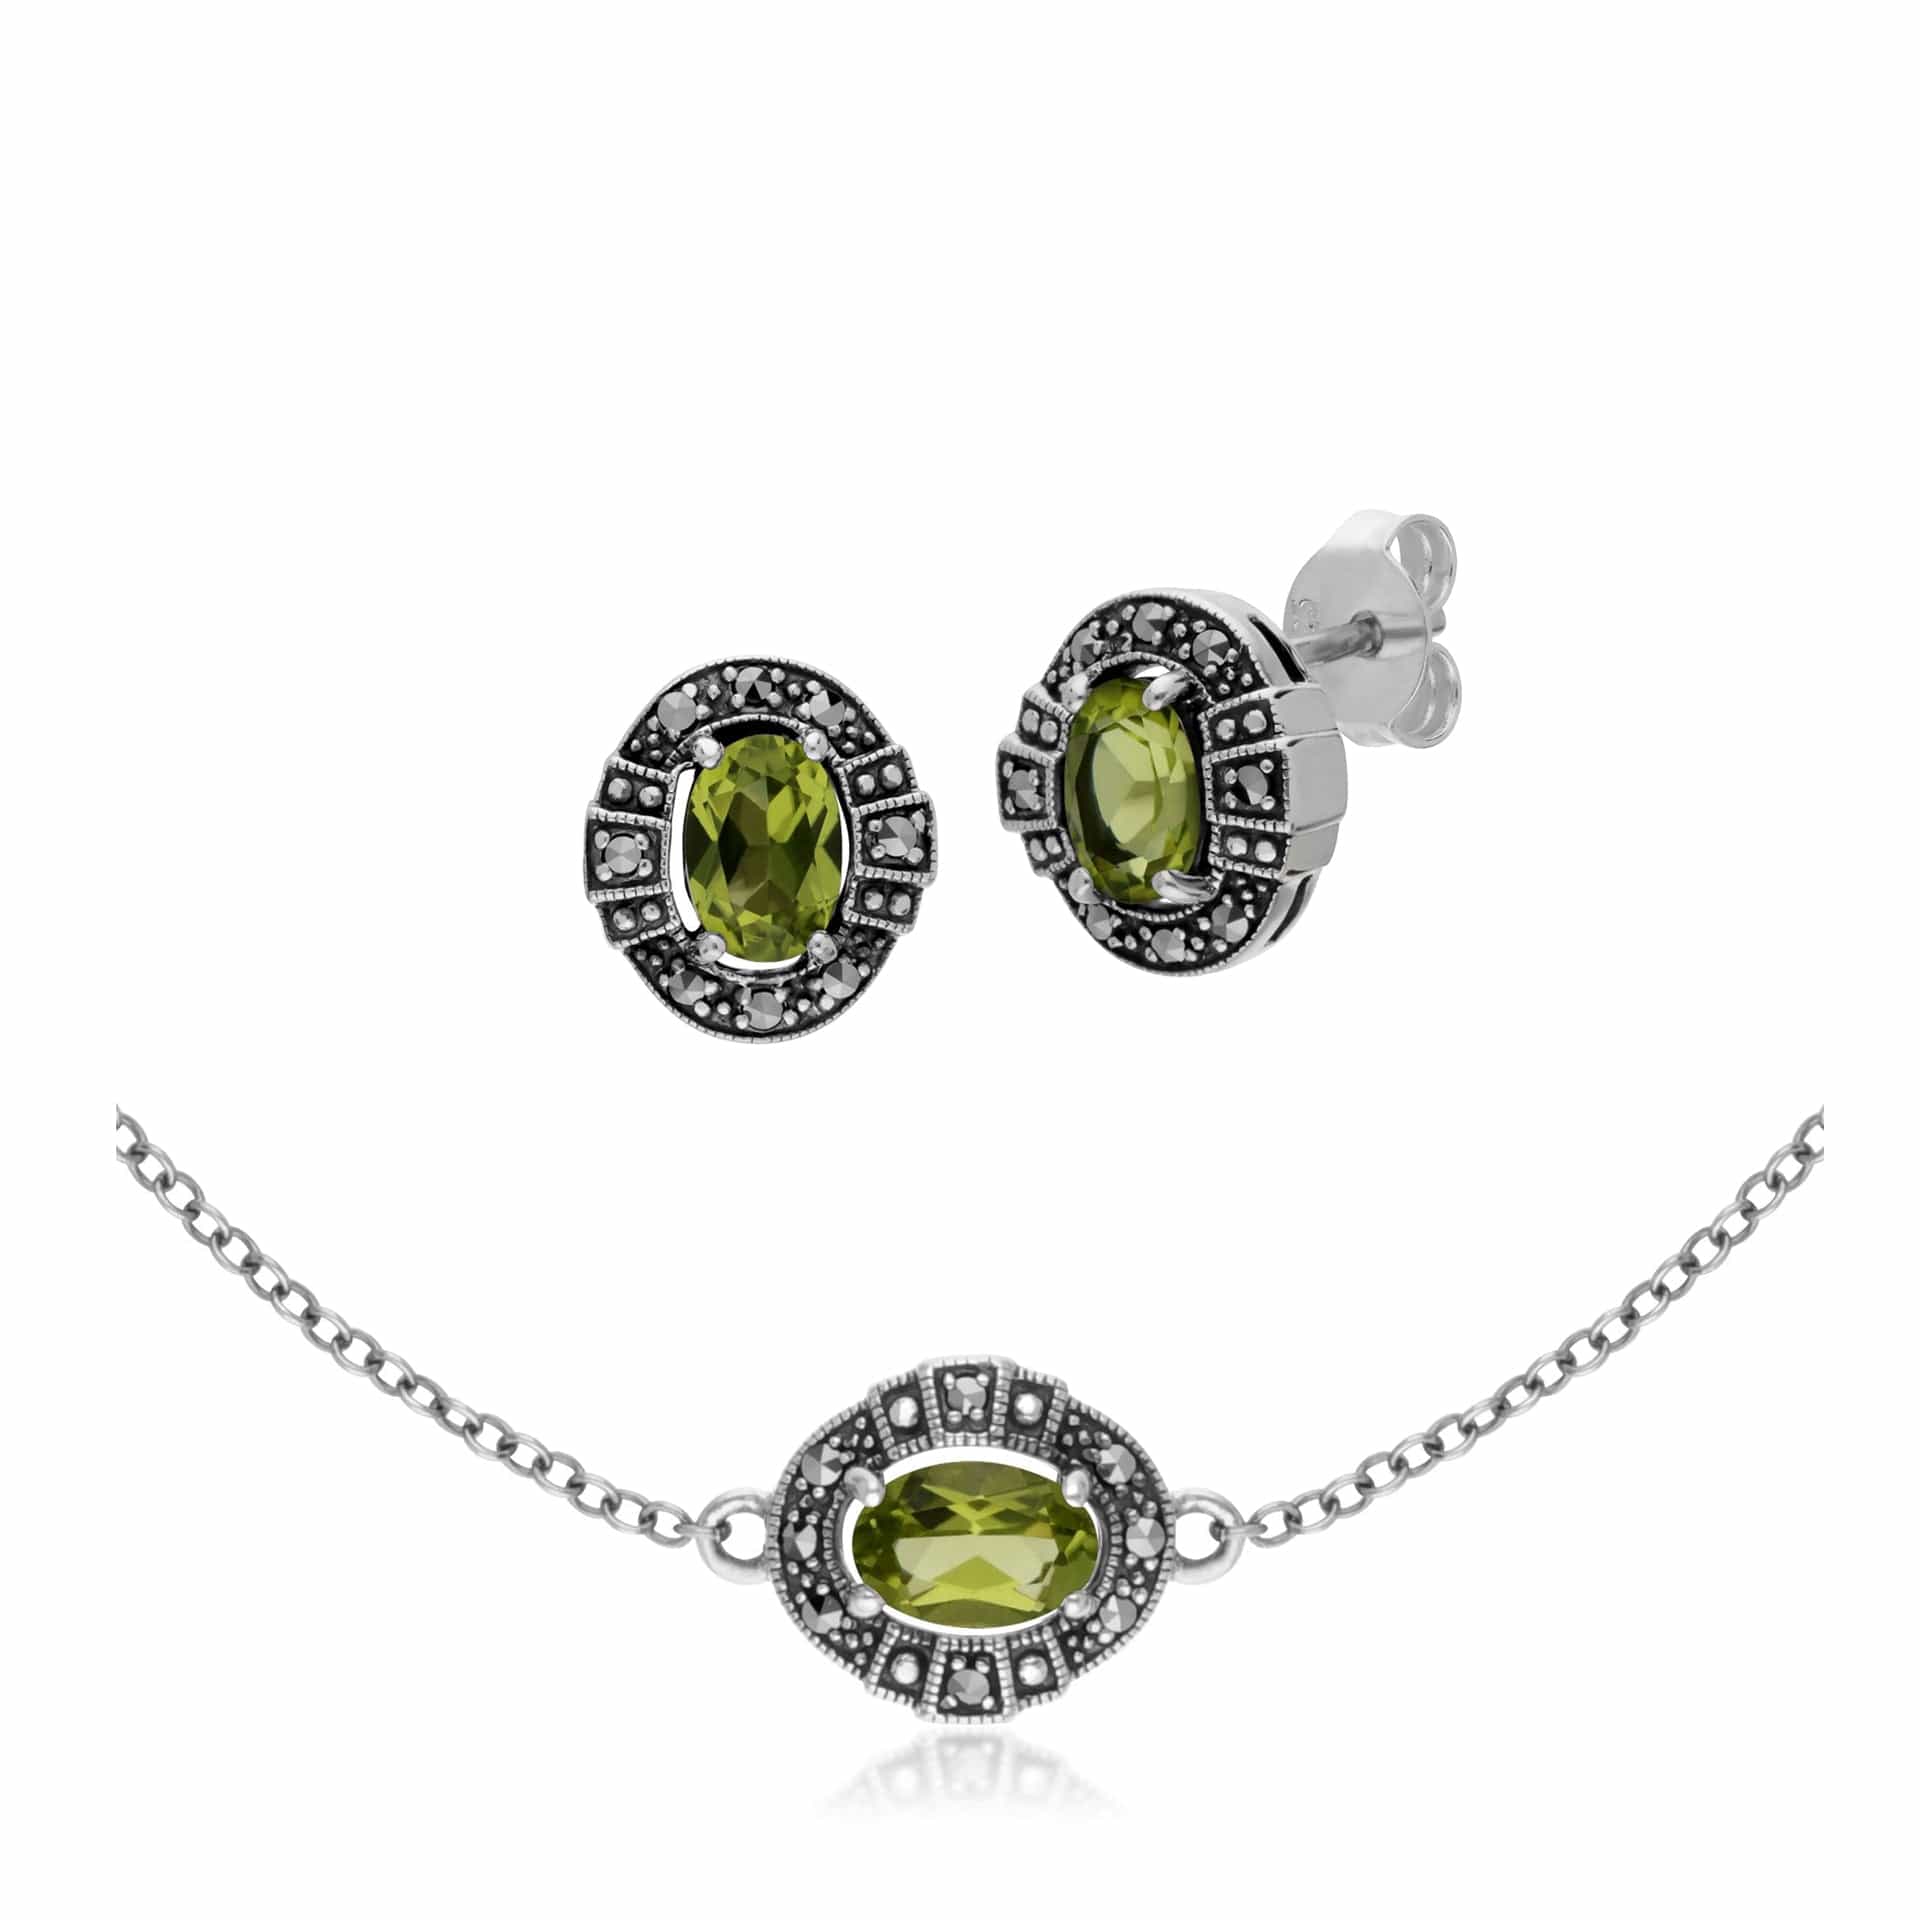 214E873004925-214L165404925 Art Deco Style Oval Peridot and Marcasite Cluster Stud Earrings & Bracelet Set in 925 Sterling Silver 1